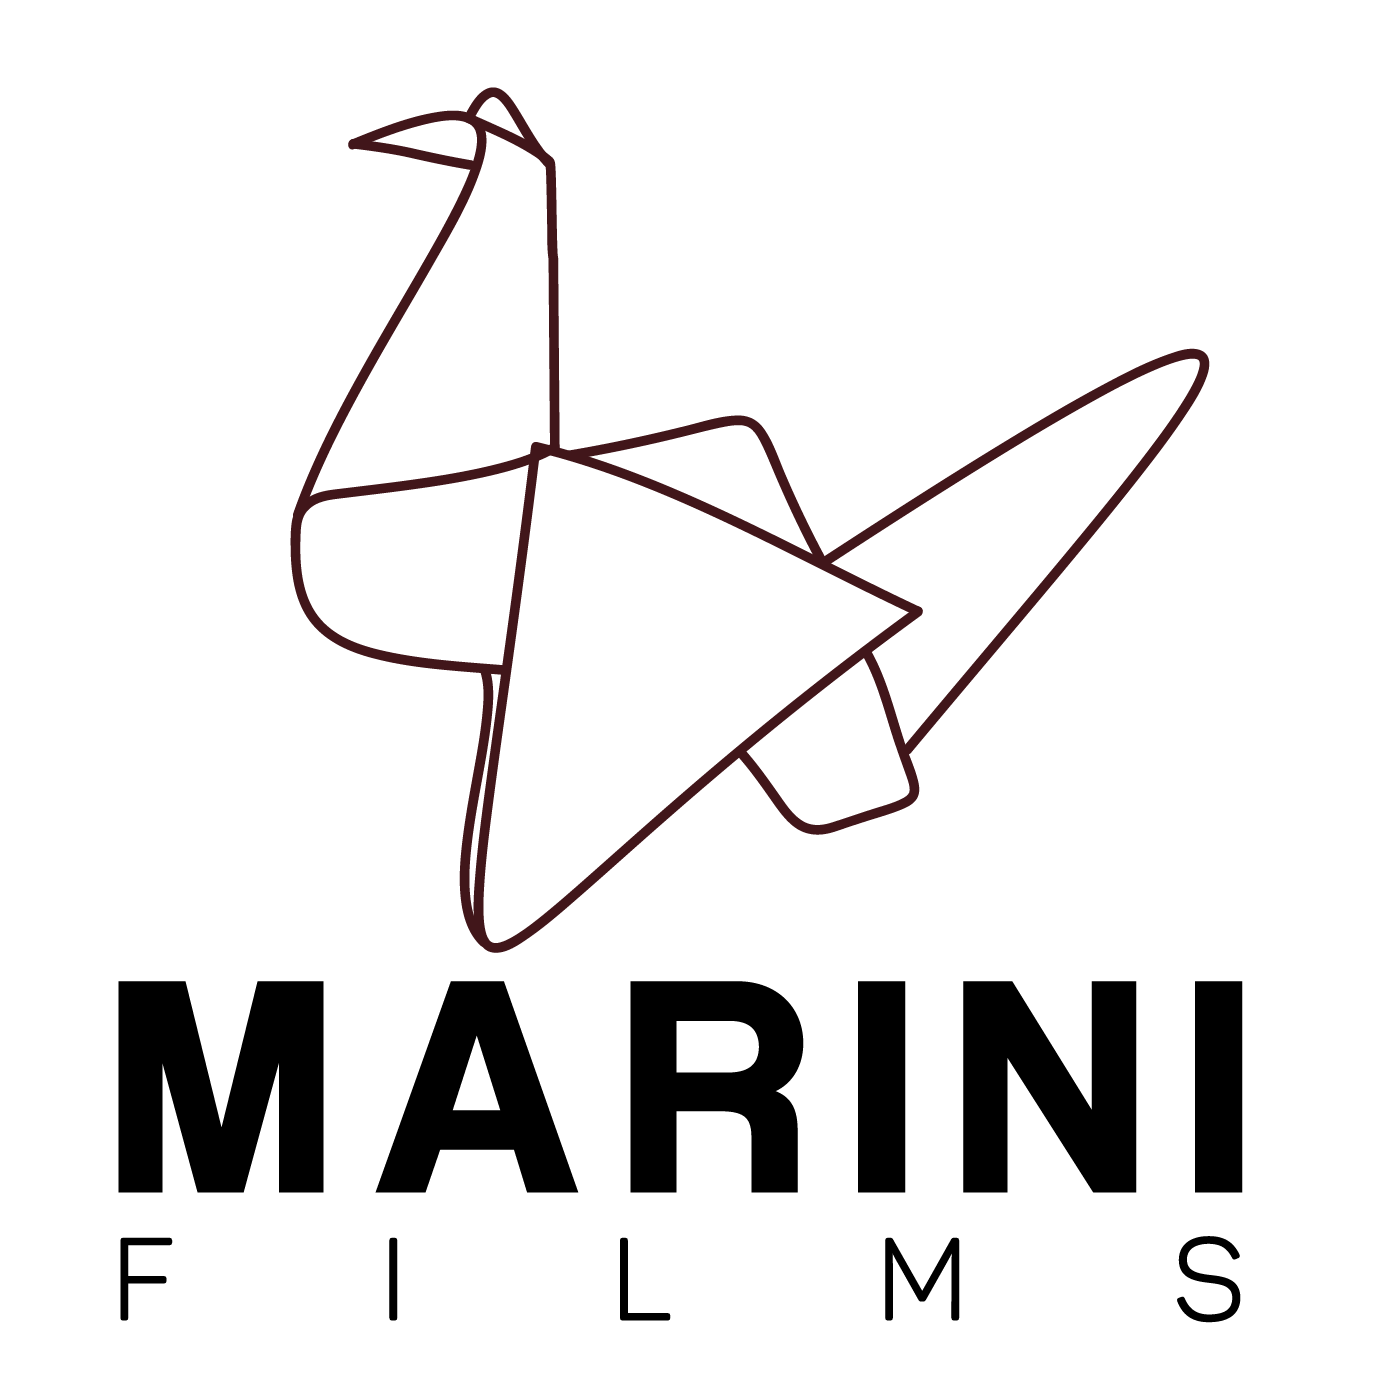 Marini Films